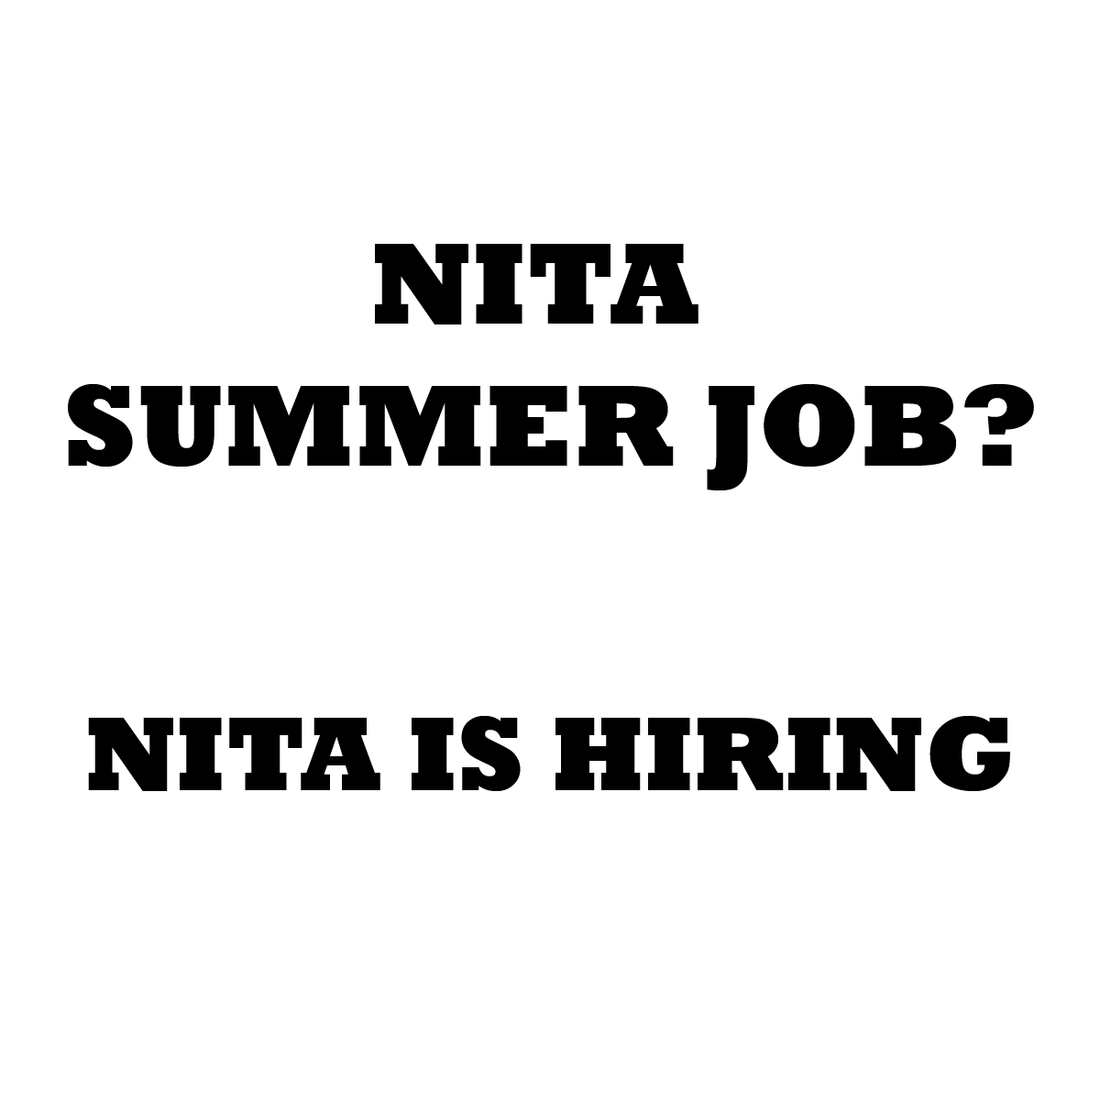 Nita Summer Job?